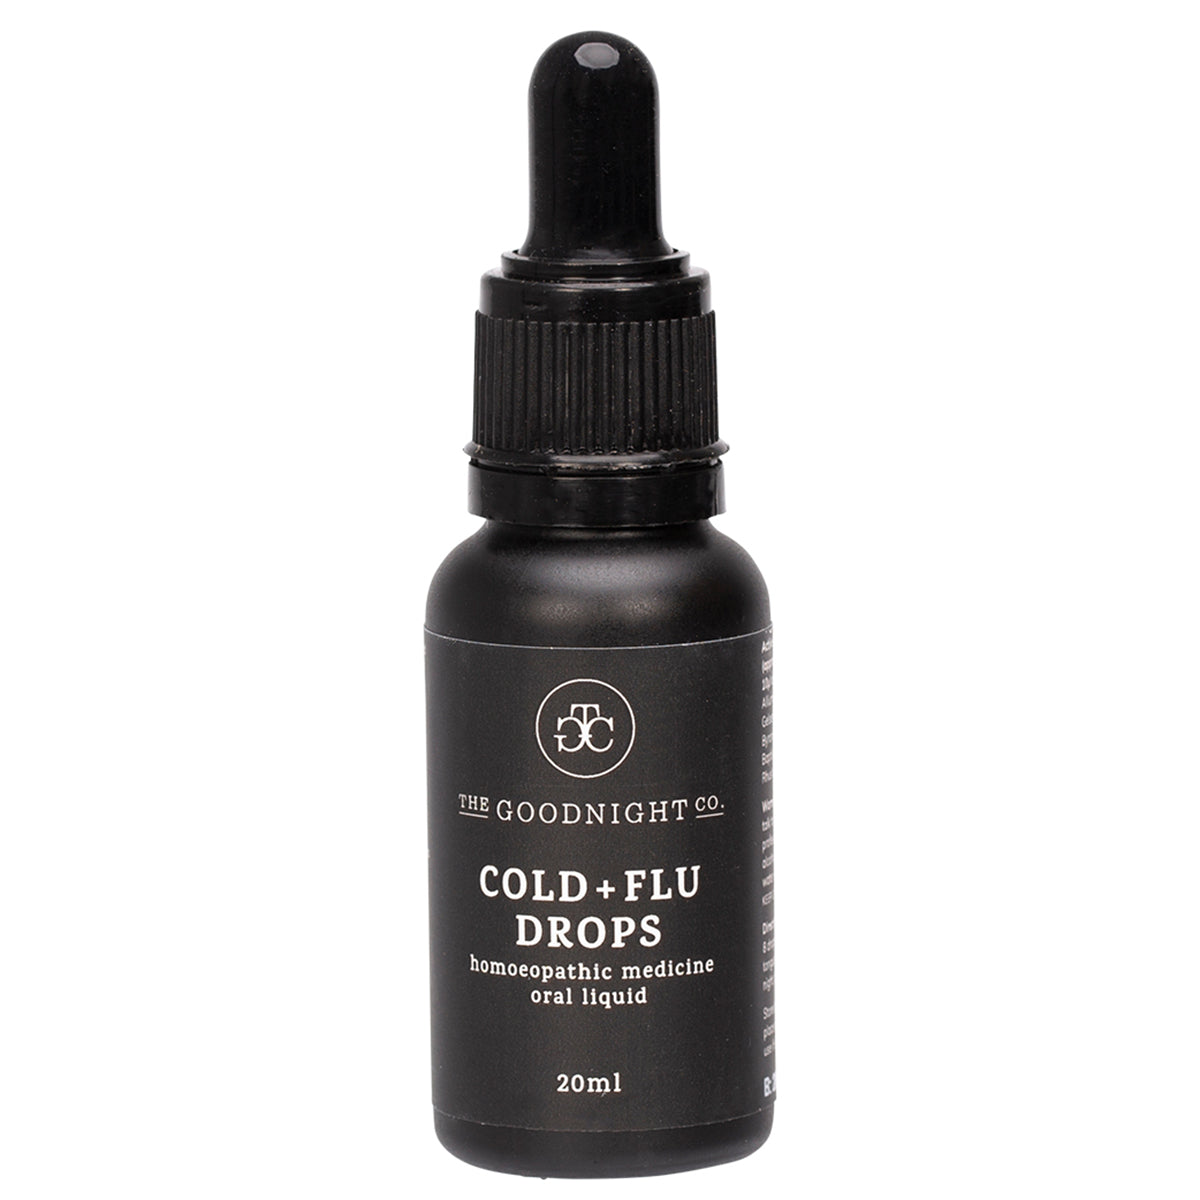 The Goodnight Co Cold + Flu Drops Homeopathic Medicine Oral Liquid